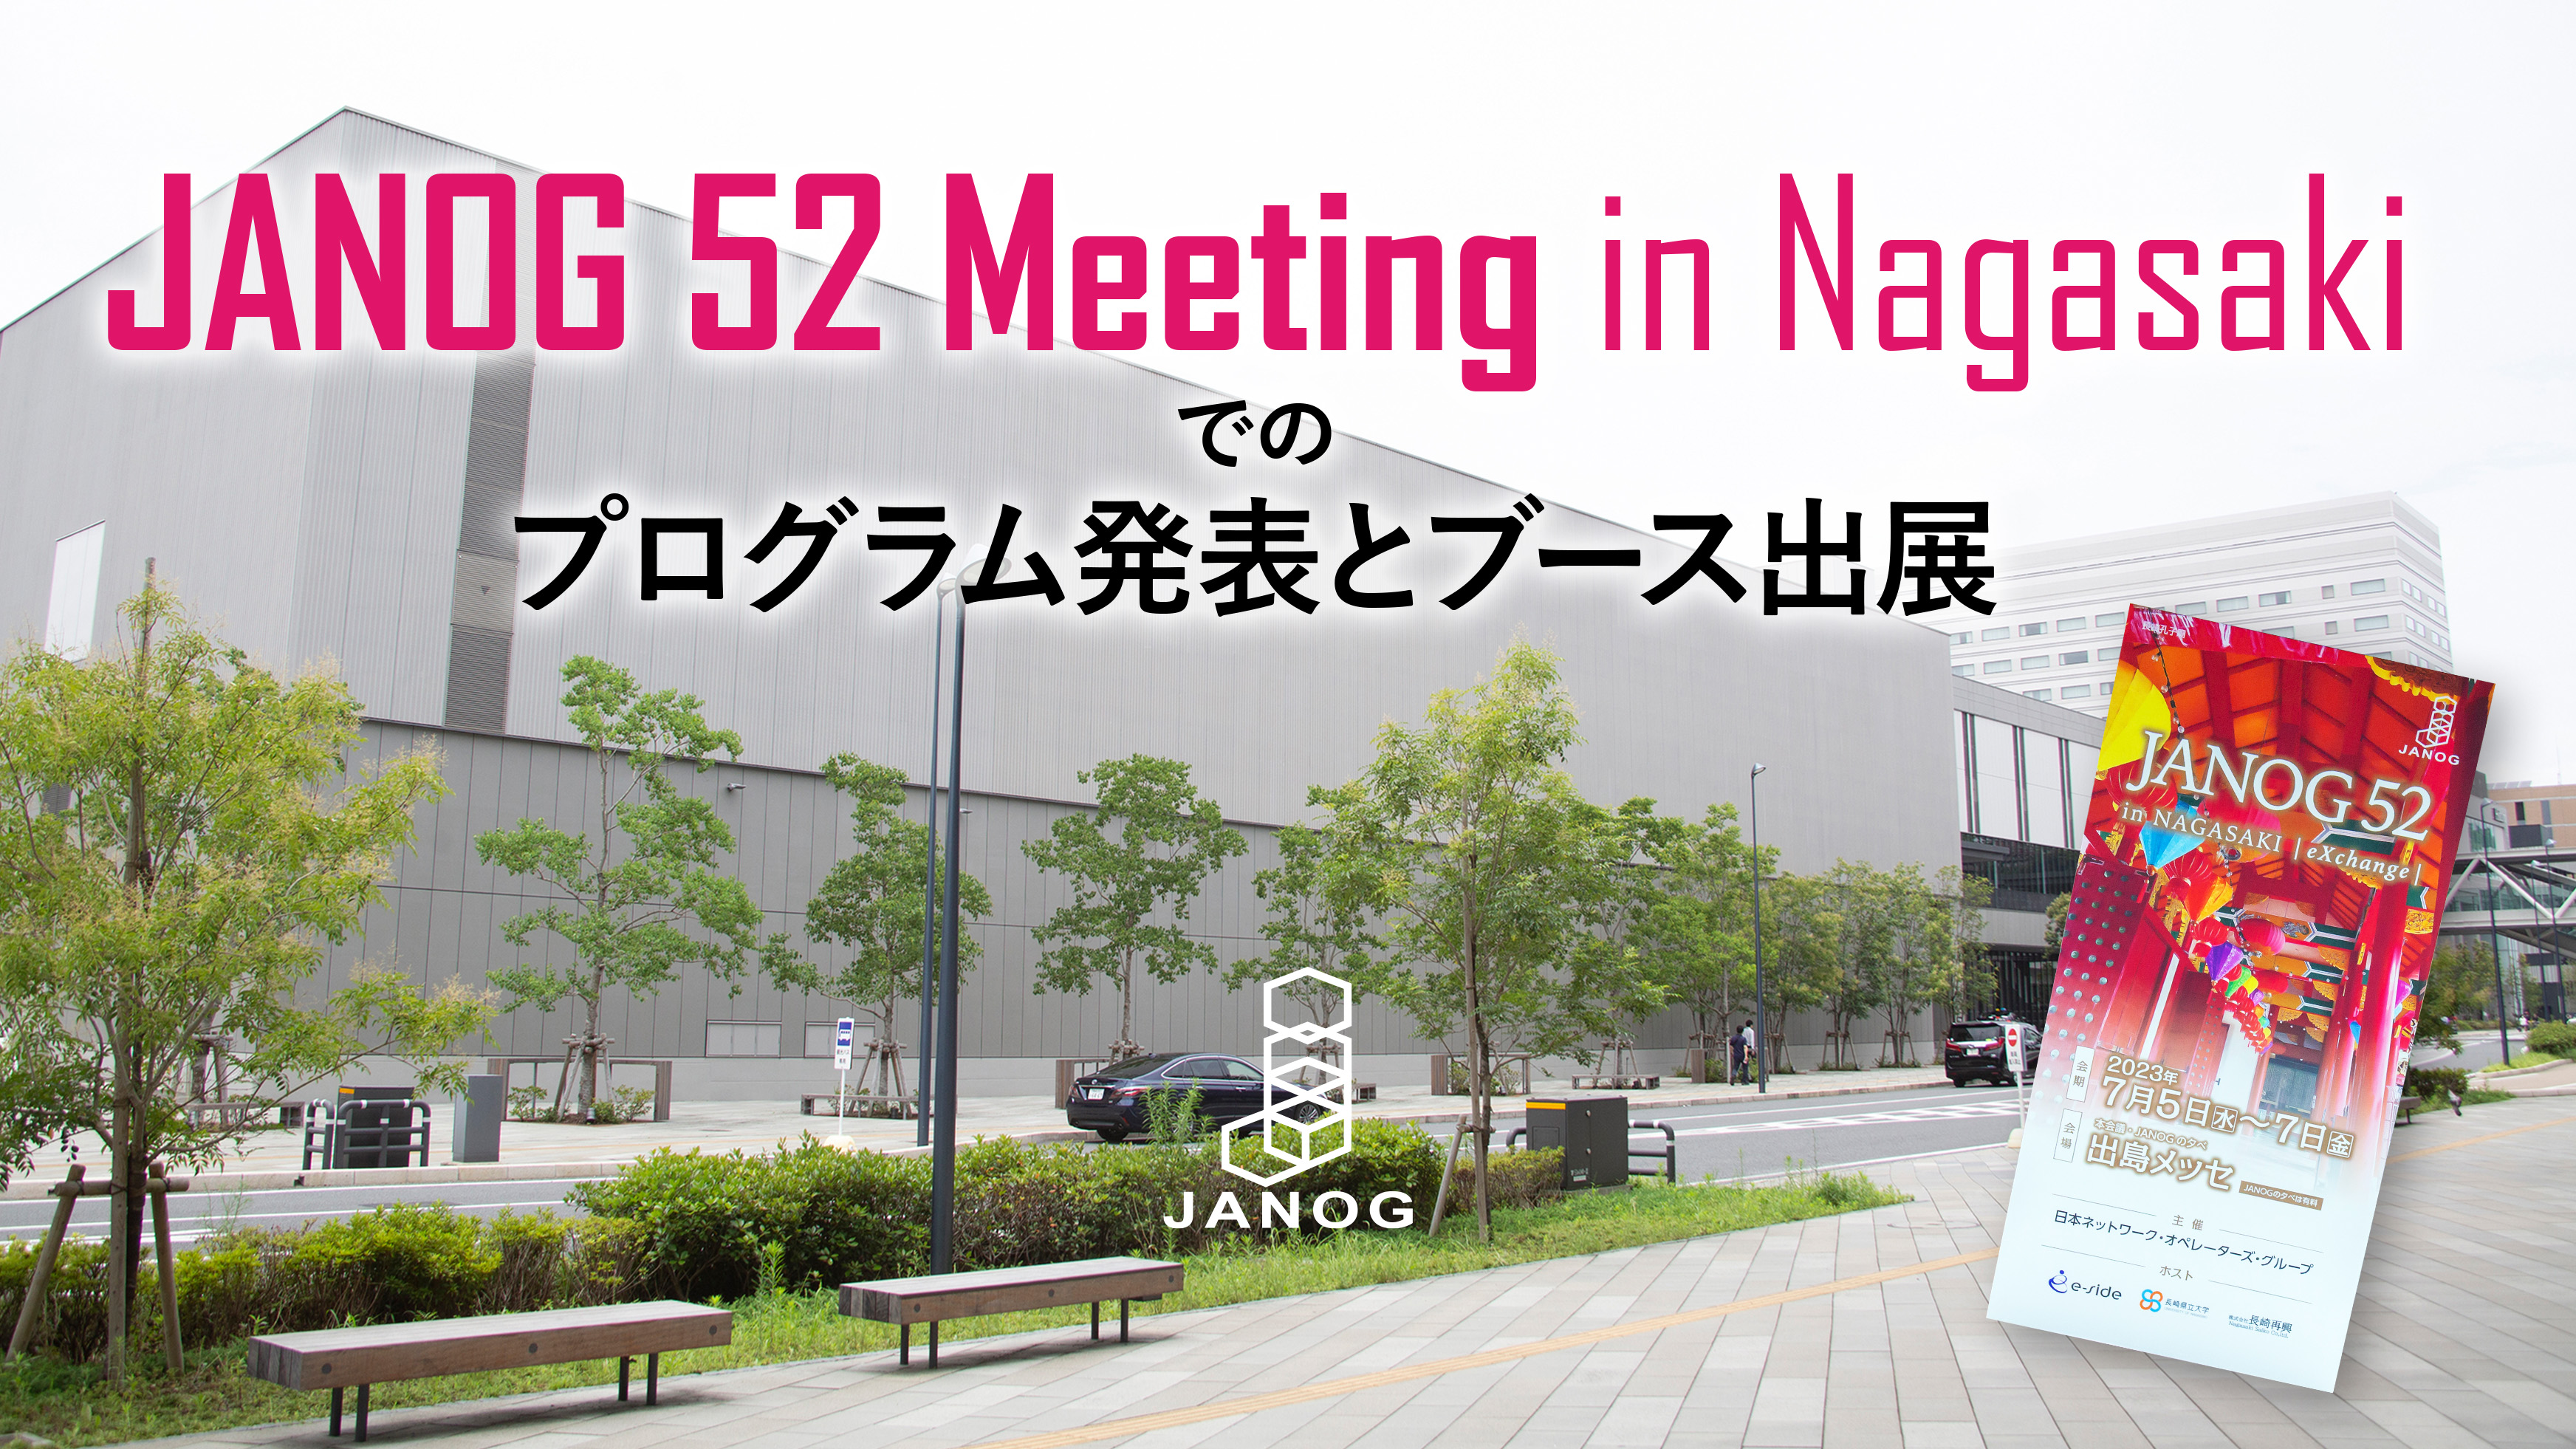 JANOG52 Meeting in Nagasaki」でのプログラム発表とブース出展